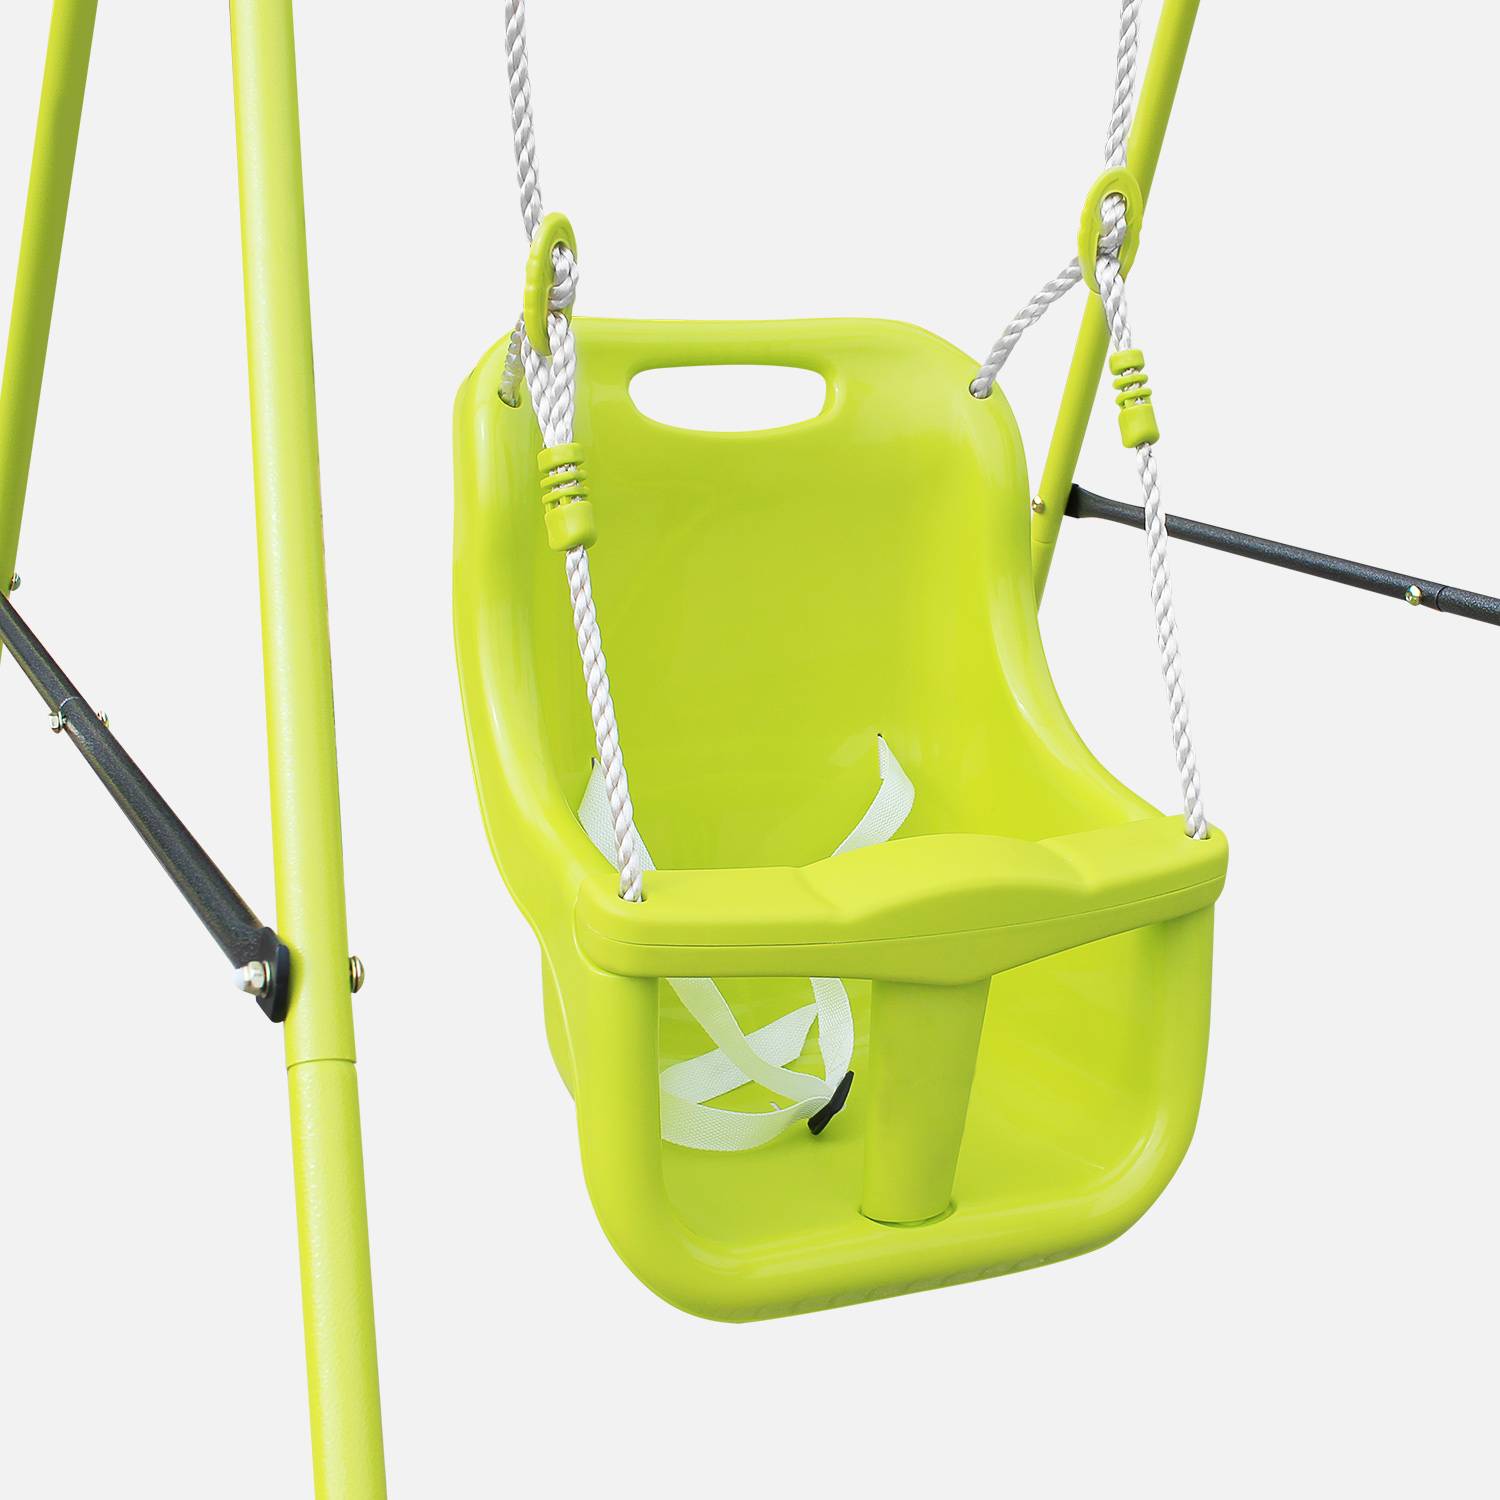 Toddler and kids garden swing, 97x147x118cm, Farou, Metal frame, Plastic seat, Green,sweeek,Photo6